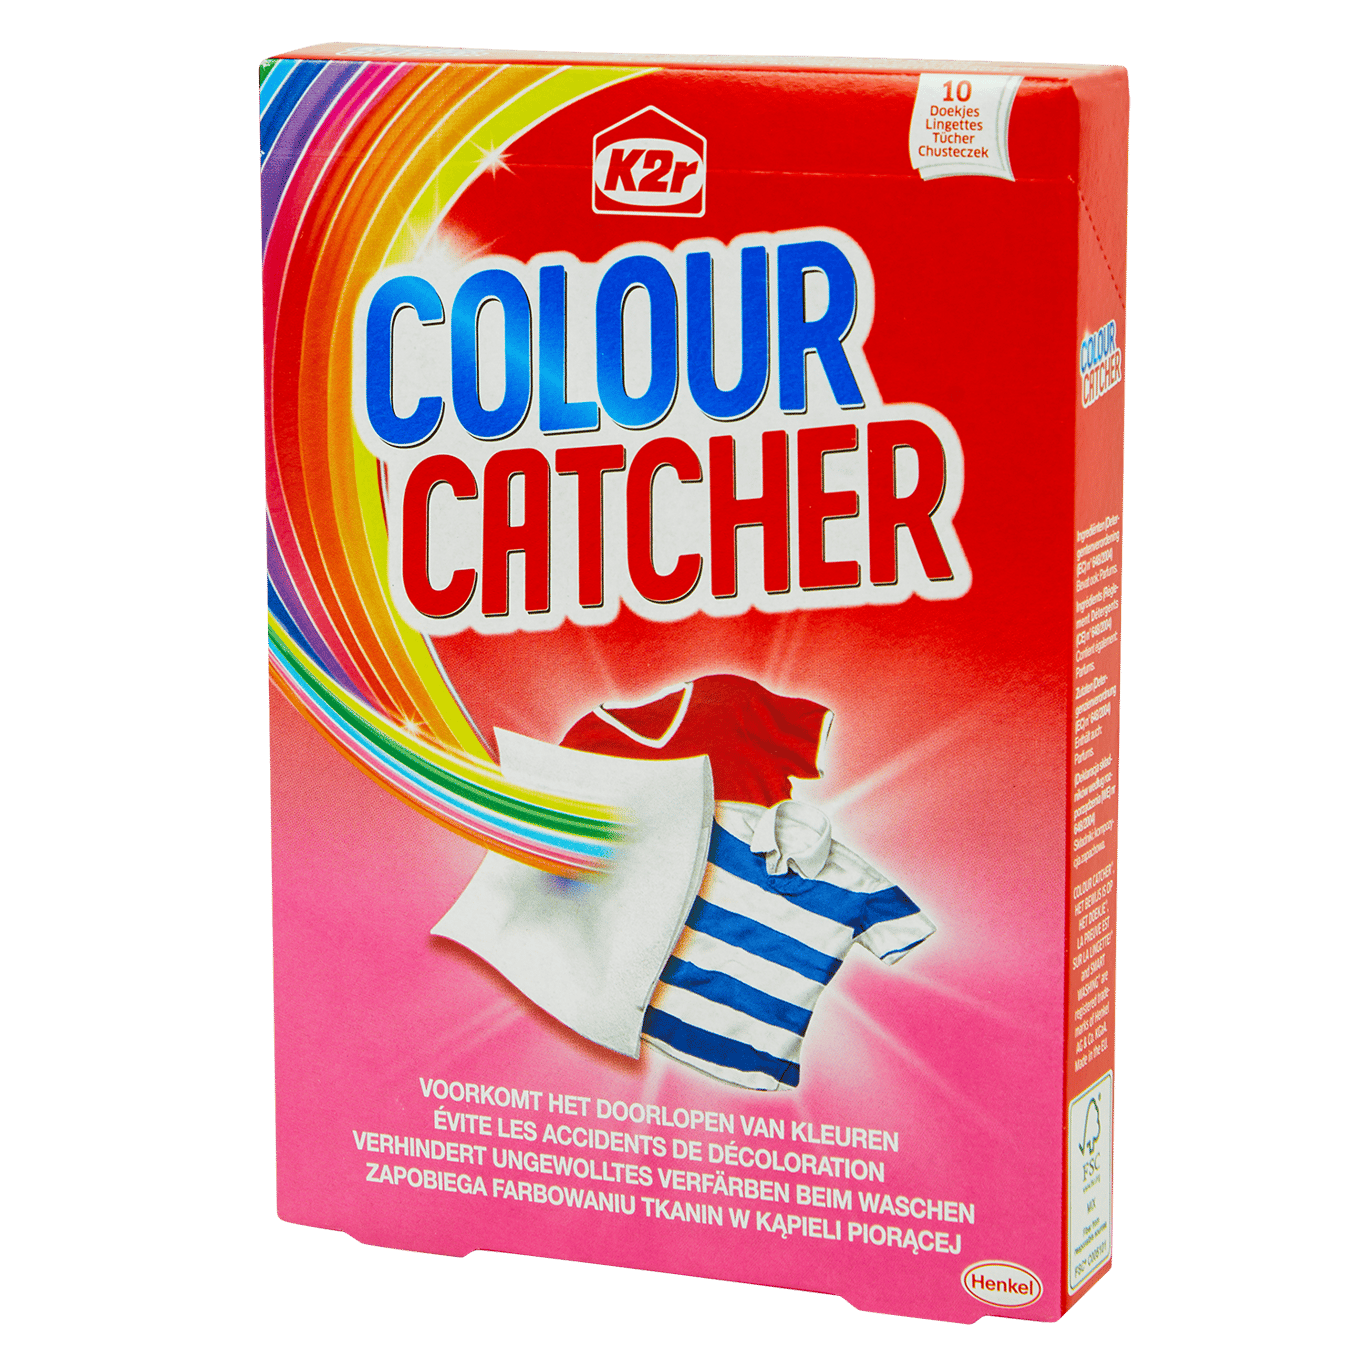 Ubrousky do pračky K2r Colour Catcher